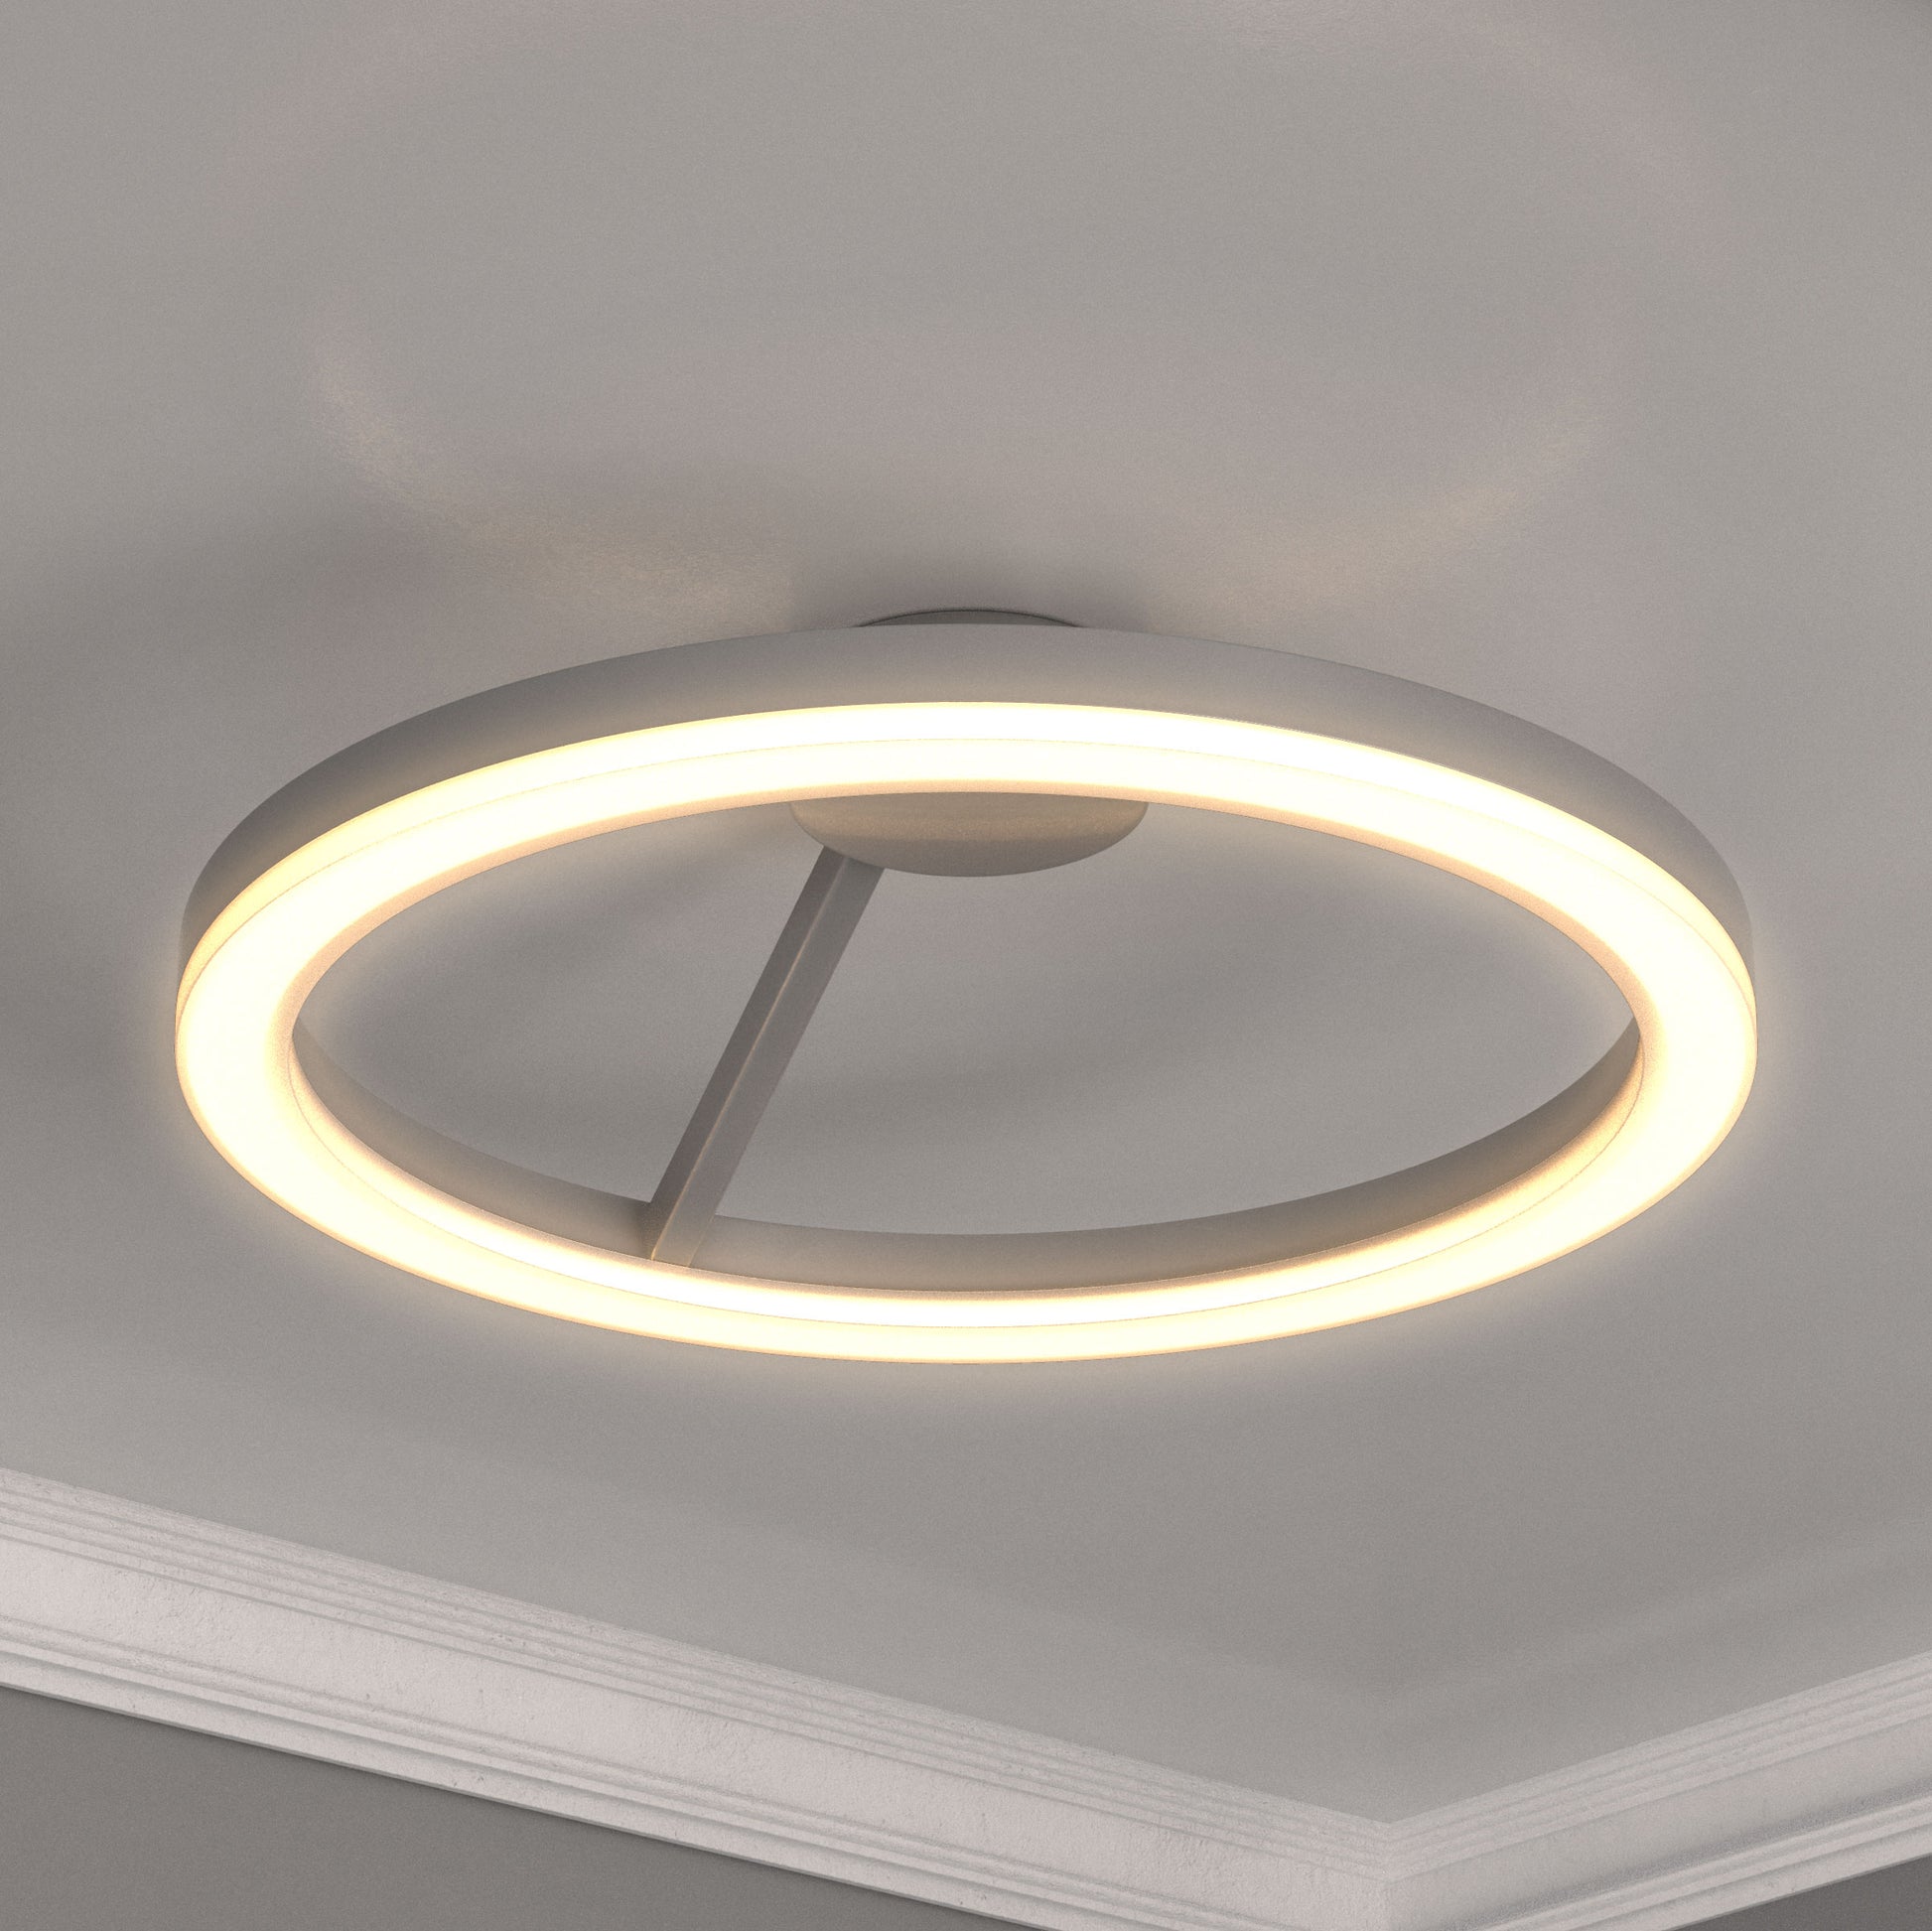 ceiling-lamp-31w-3000k-aluminum-body-finish-round-shade-led-ceiling-lights